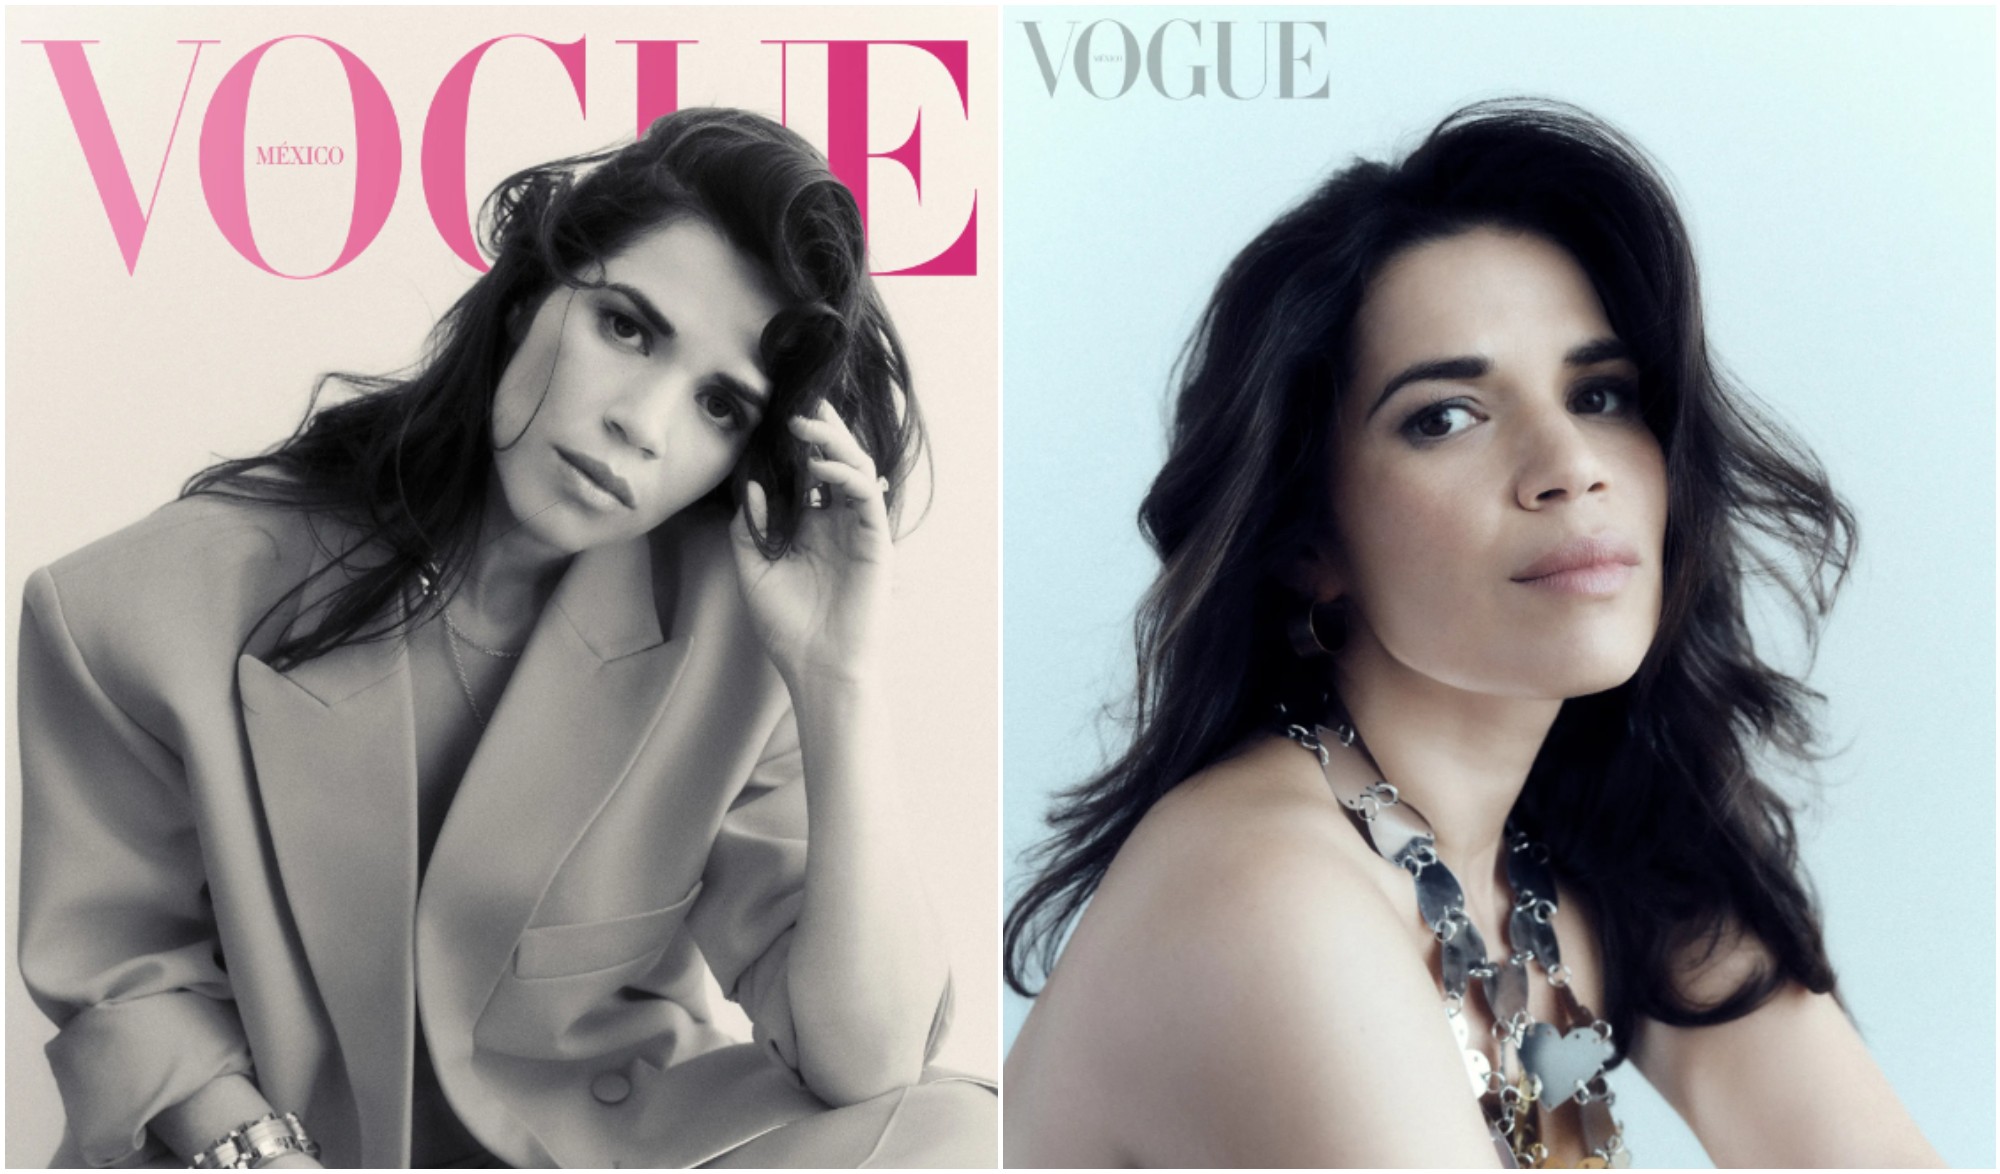 Actriz de origen hondureño, América Ferrera, aparece en portada de Vogue México